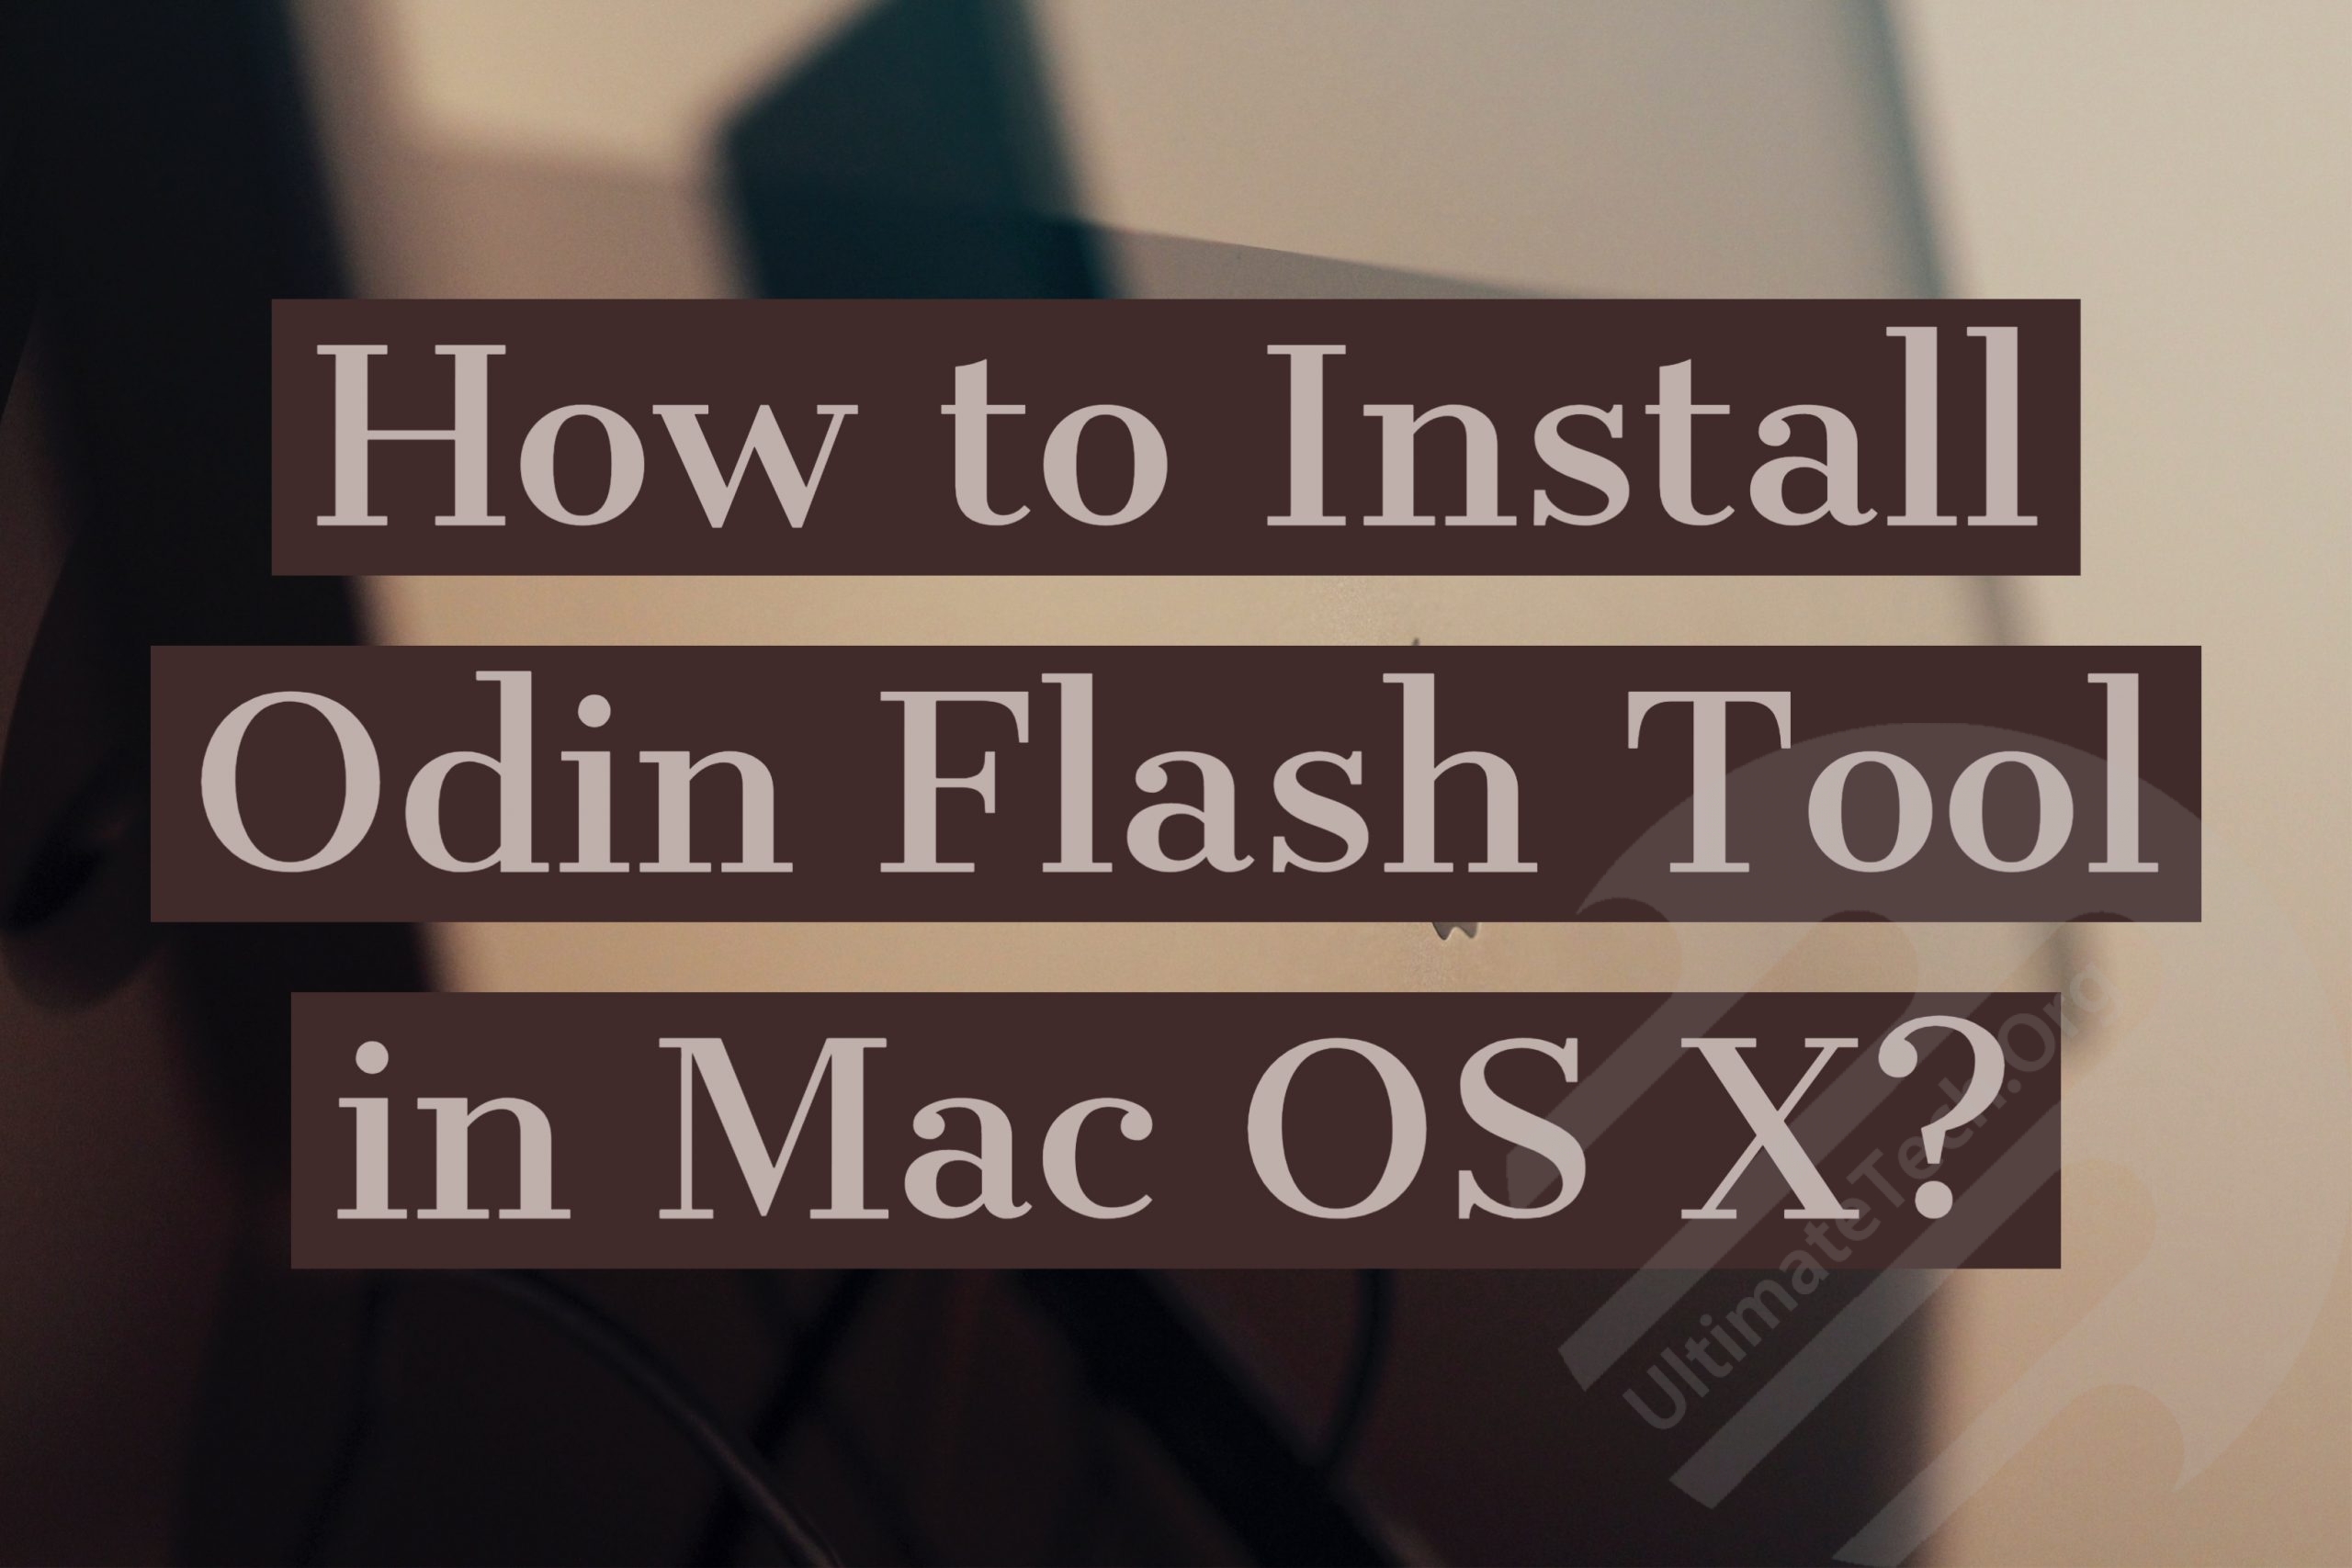 odin flash tool for mac